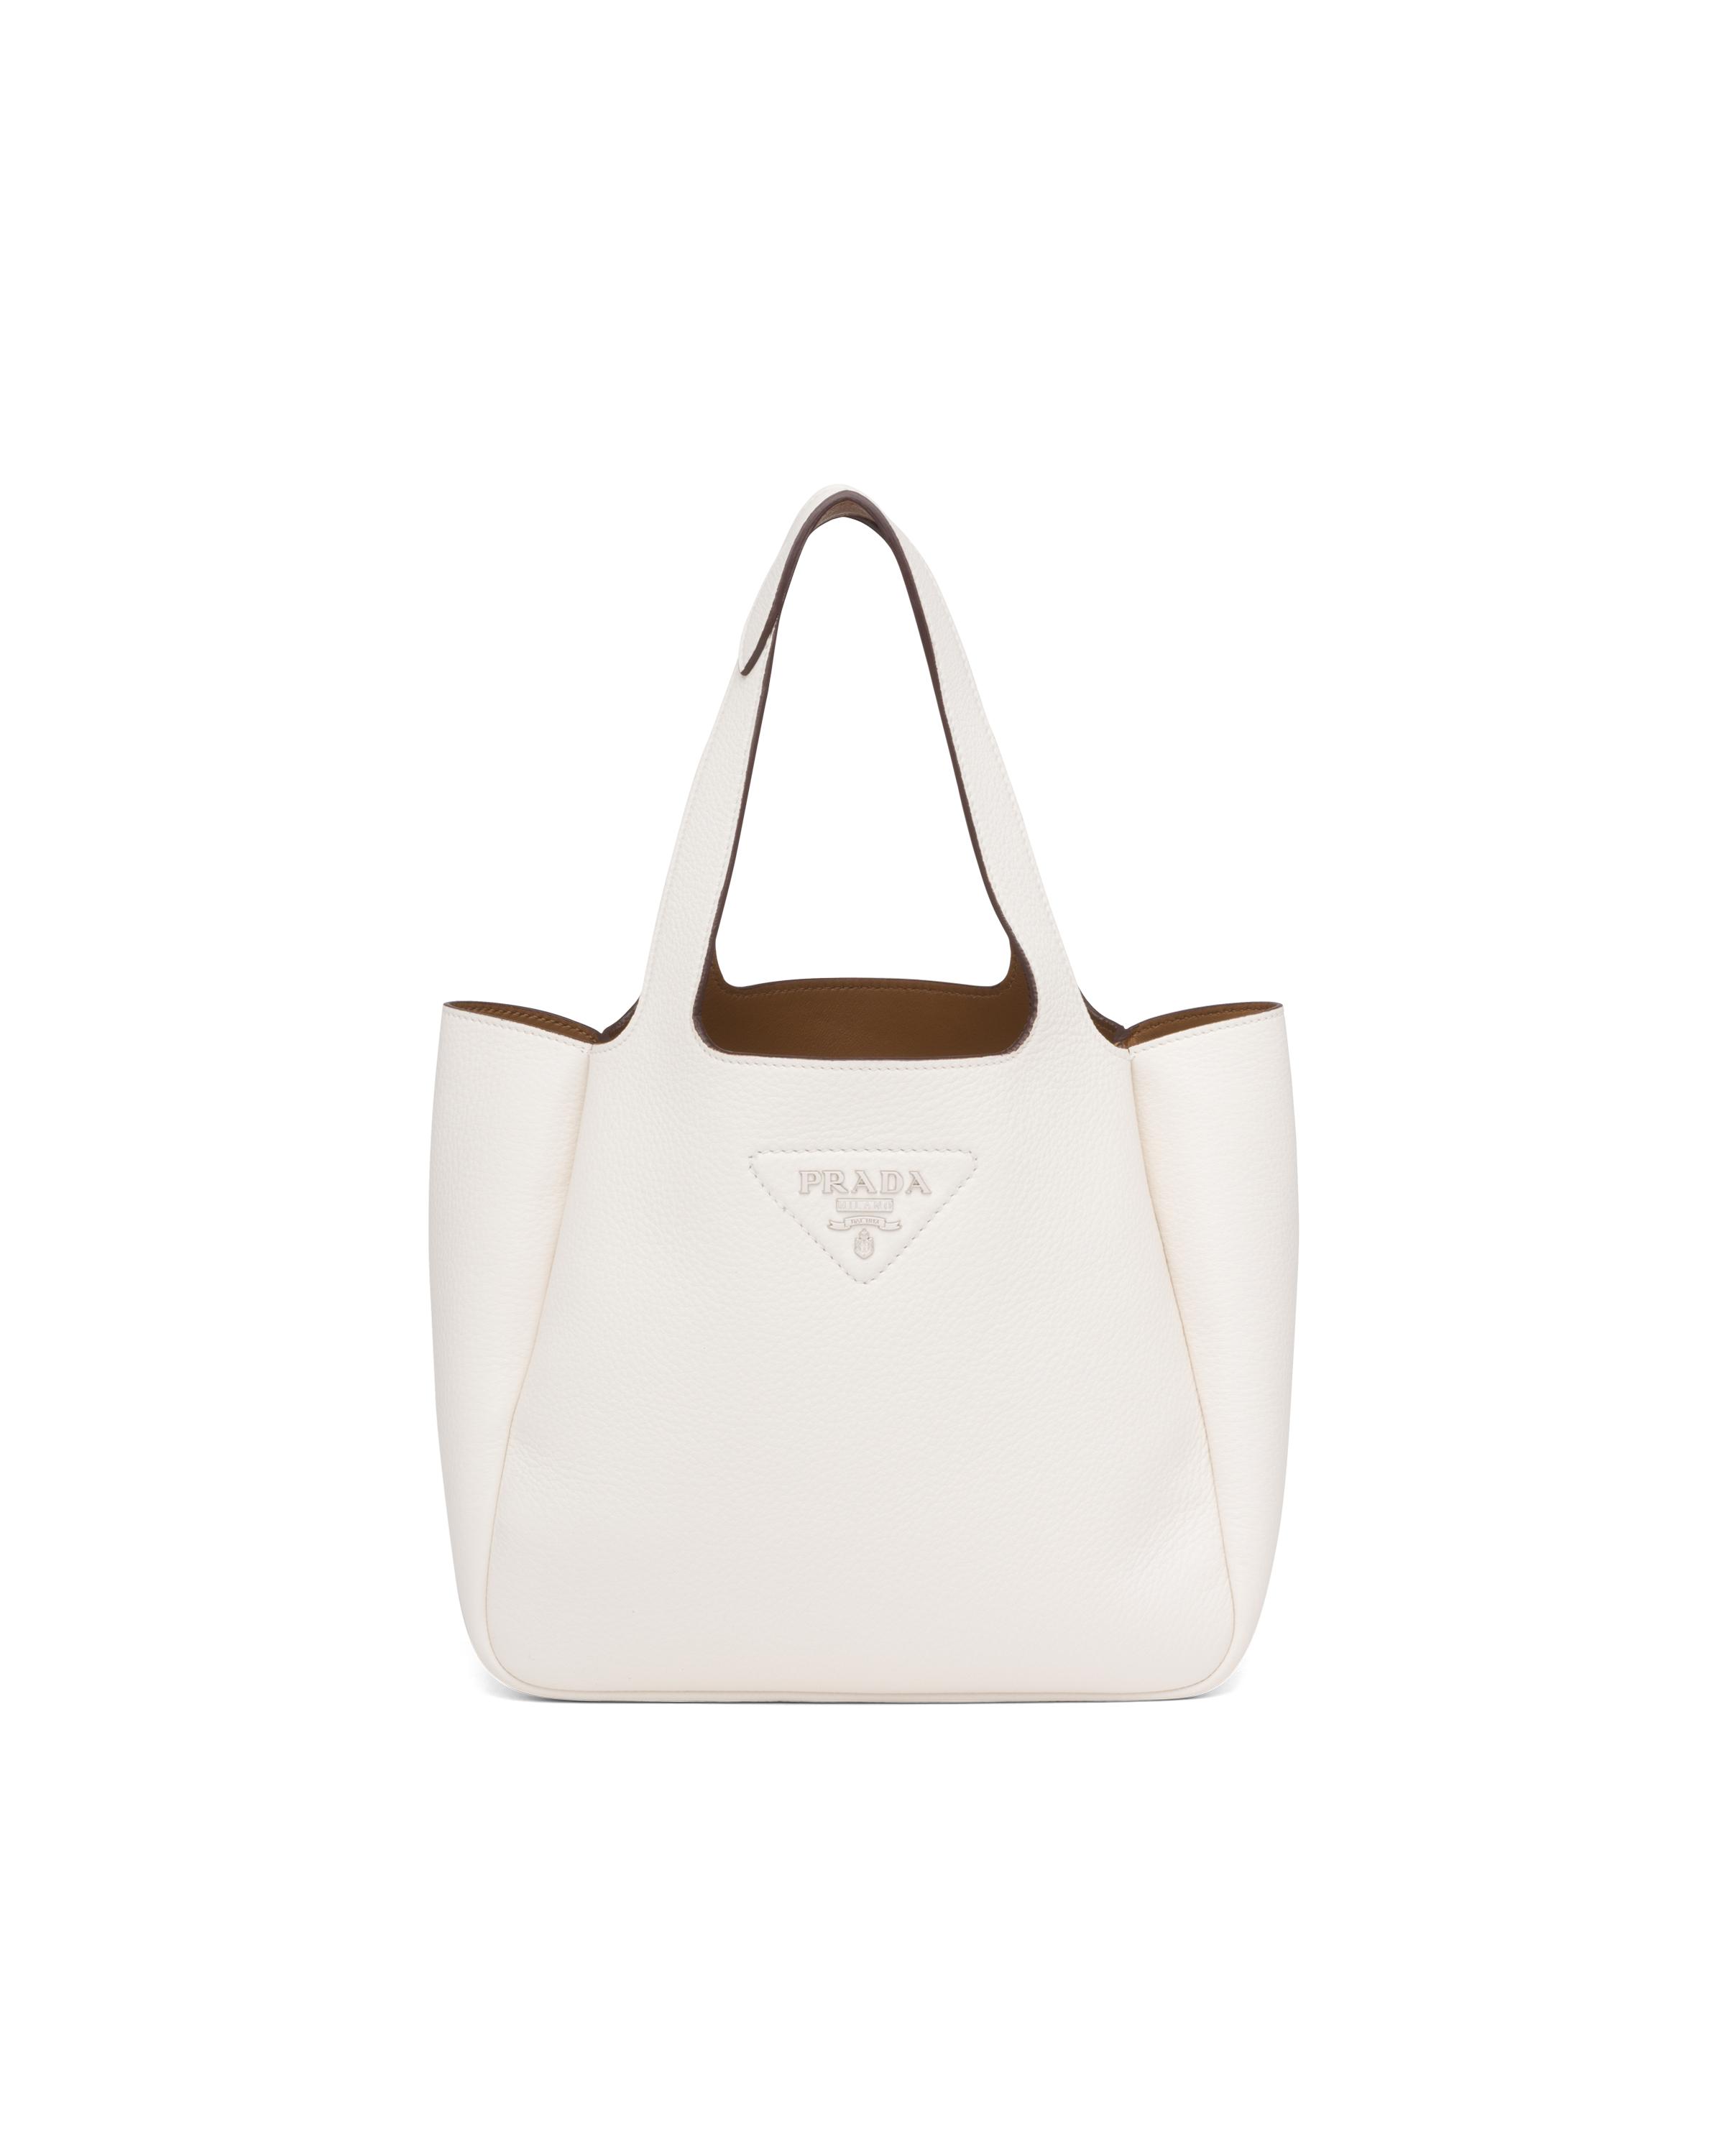 Prada Dynamique Leather Handbag in White/Caramel (Brown) | Lyst